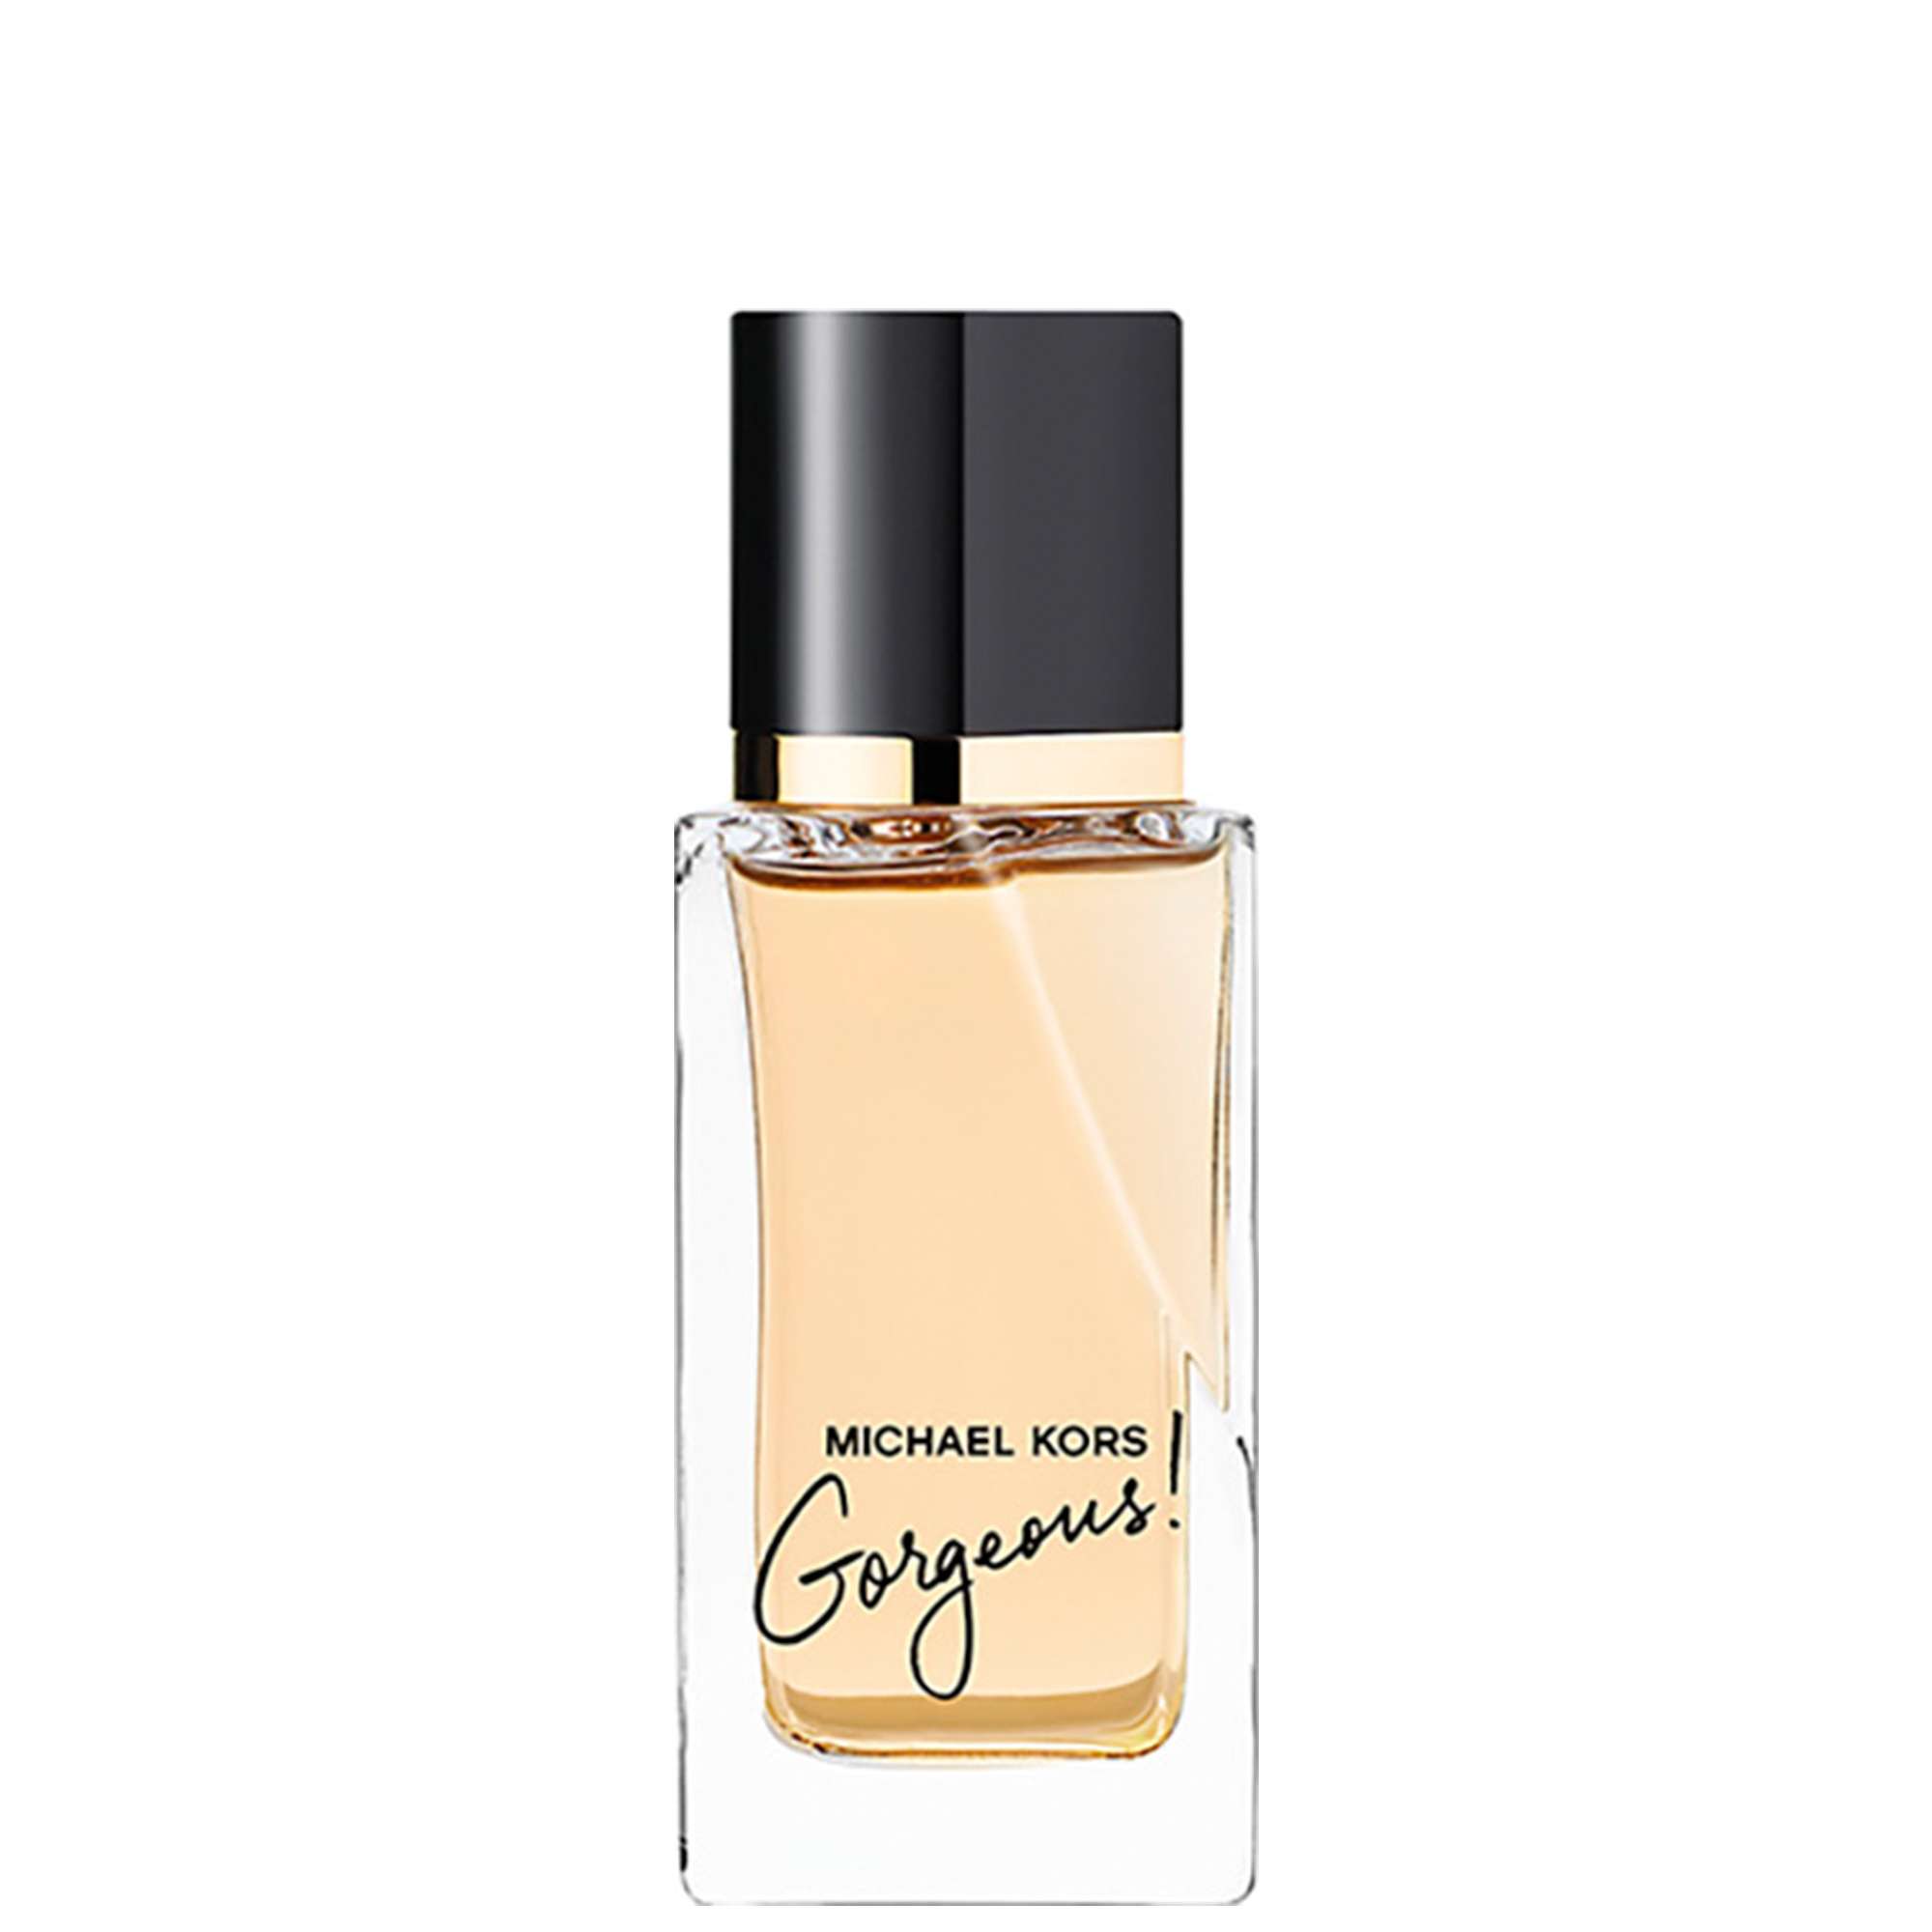 Photos - Women's Fragrance Michael Kors Gorgeous! Eau de Parfum Spray 30ml 